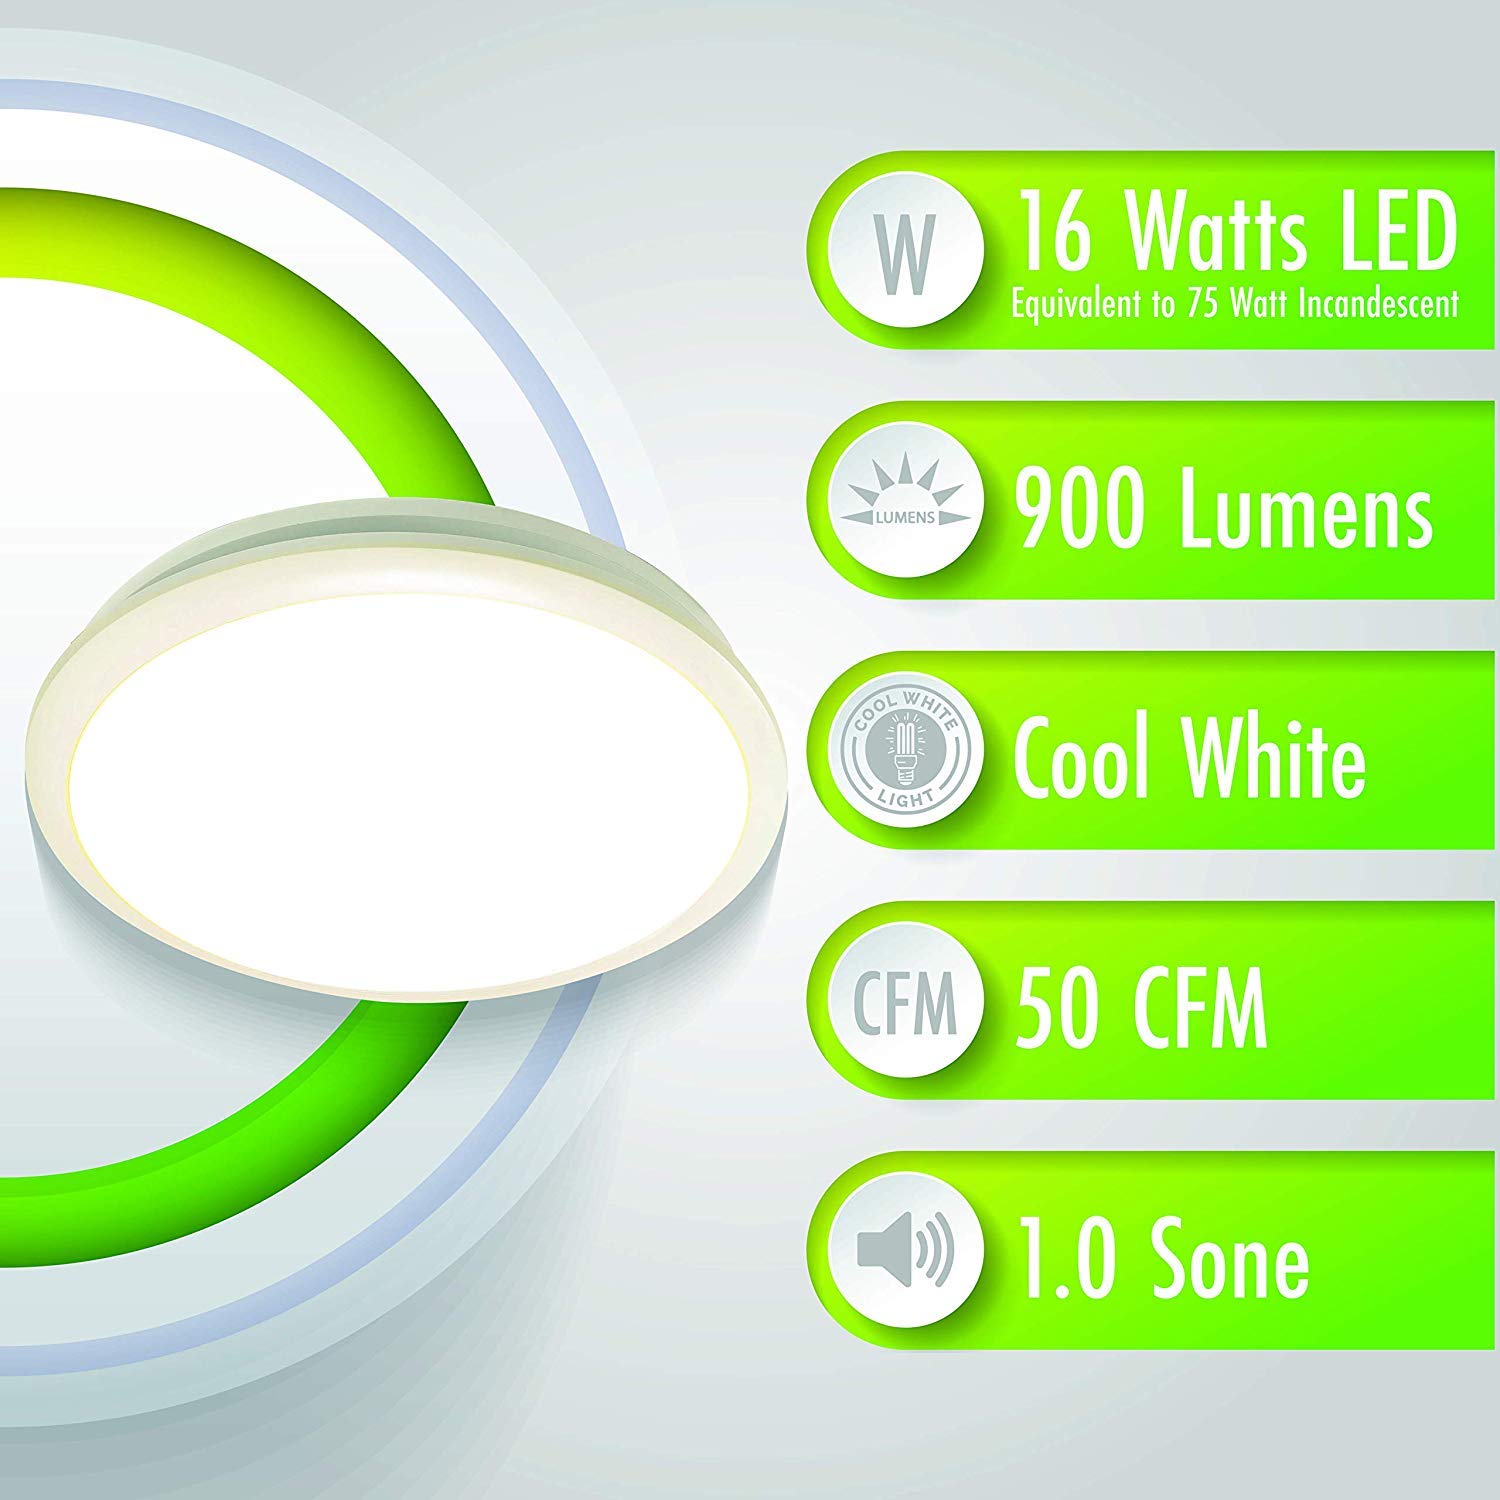 Homewerks 7141-50 Bathroom Fan Integrated LED Light Ceiling Mount Exhaust Ventilation 0.7 Sones 50 CFM, White